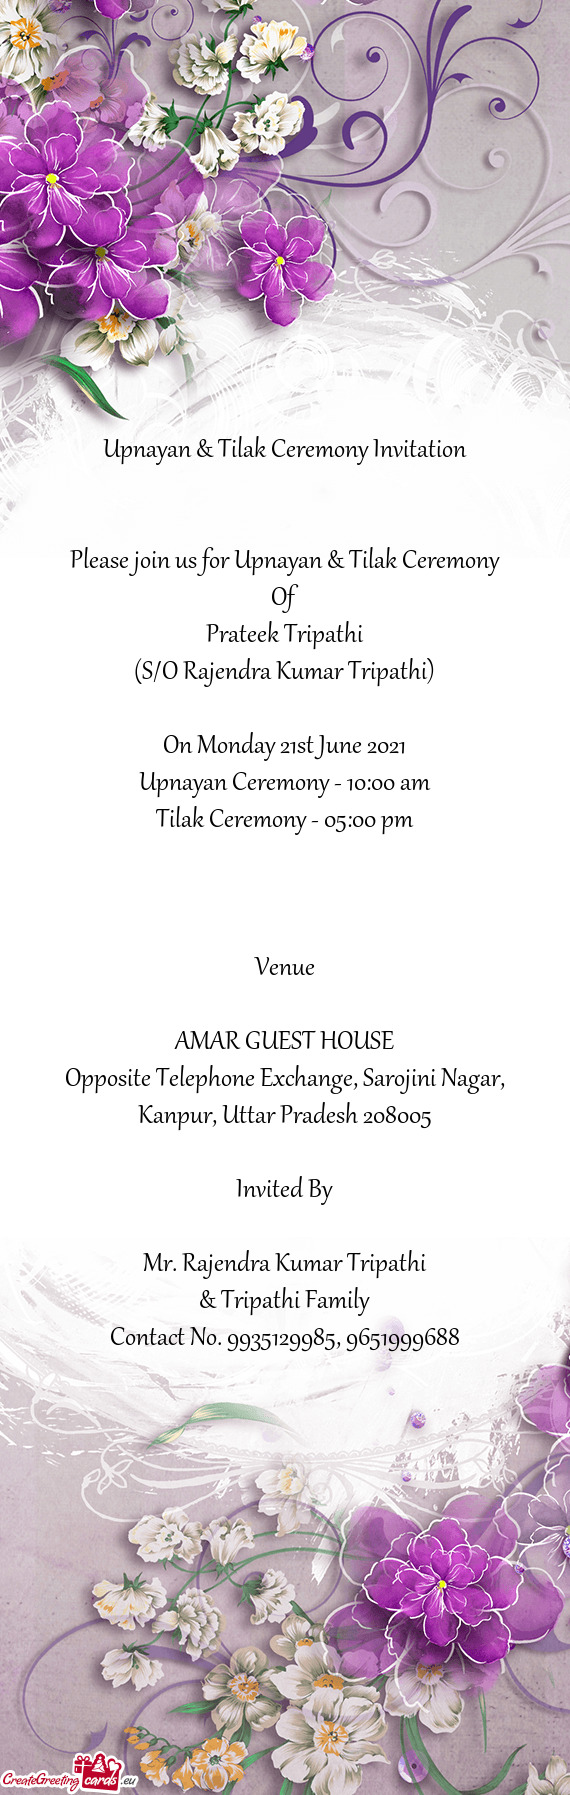 Upnayan & Tilak Ceremony Invitation